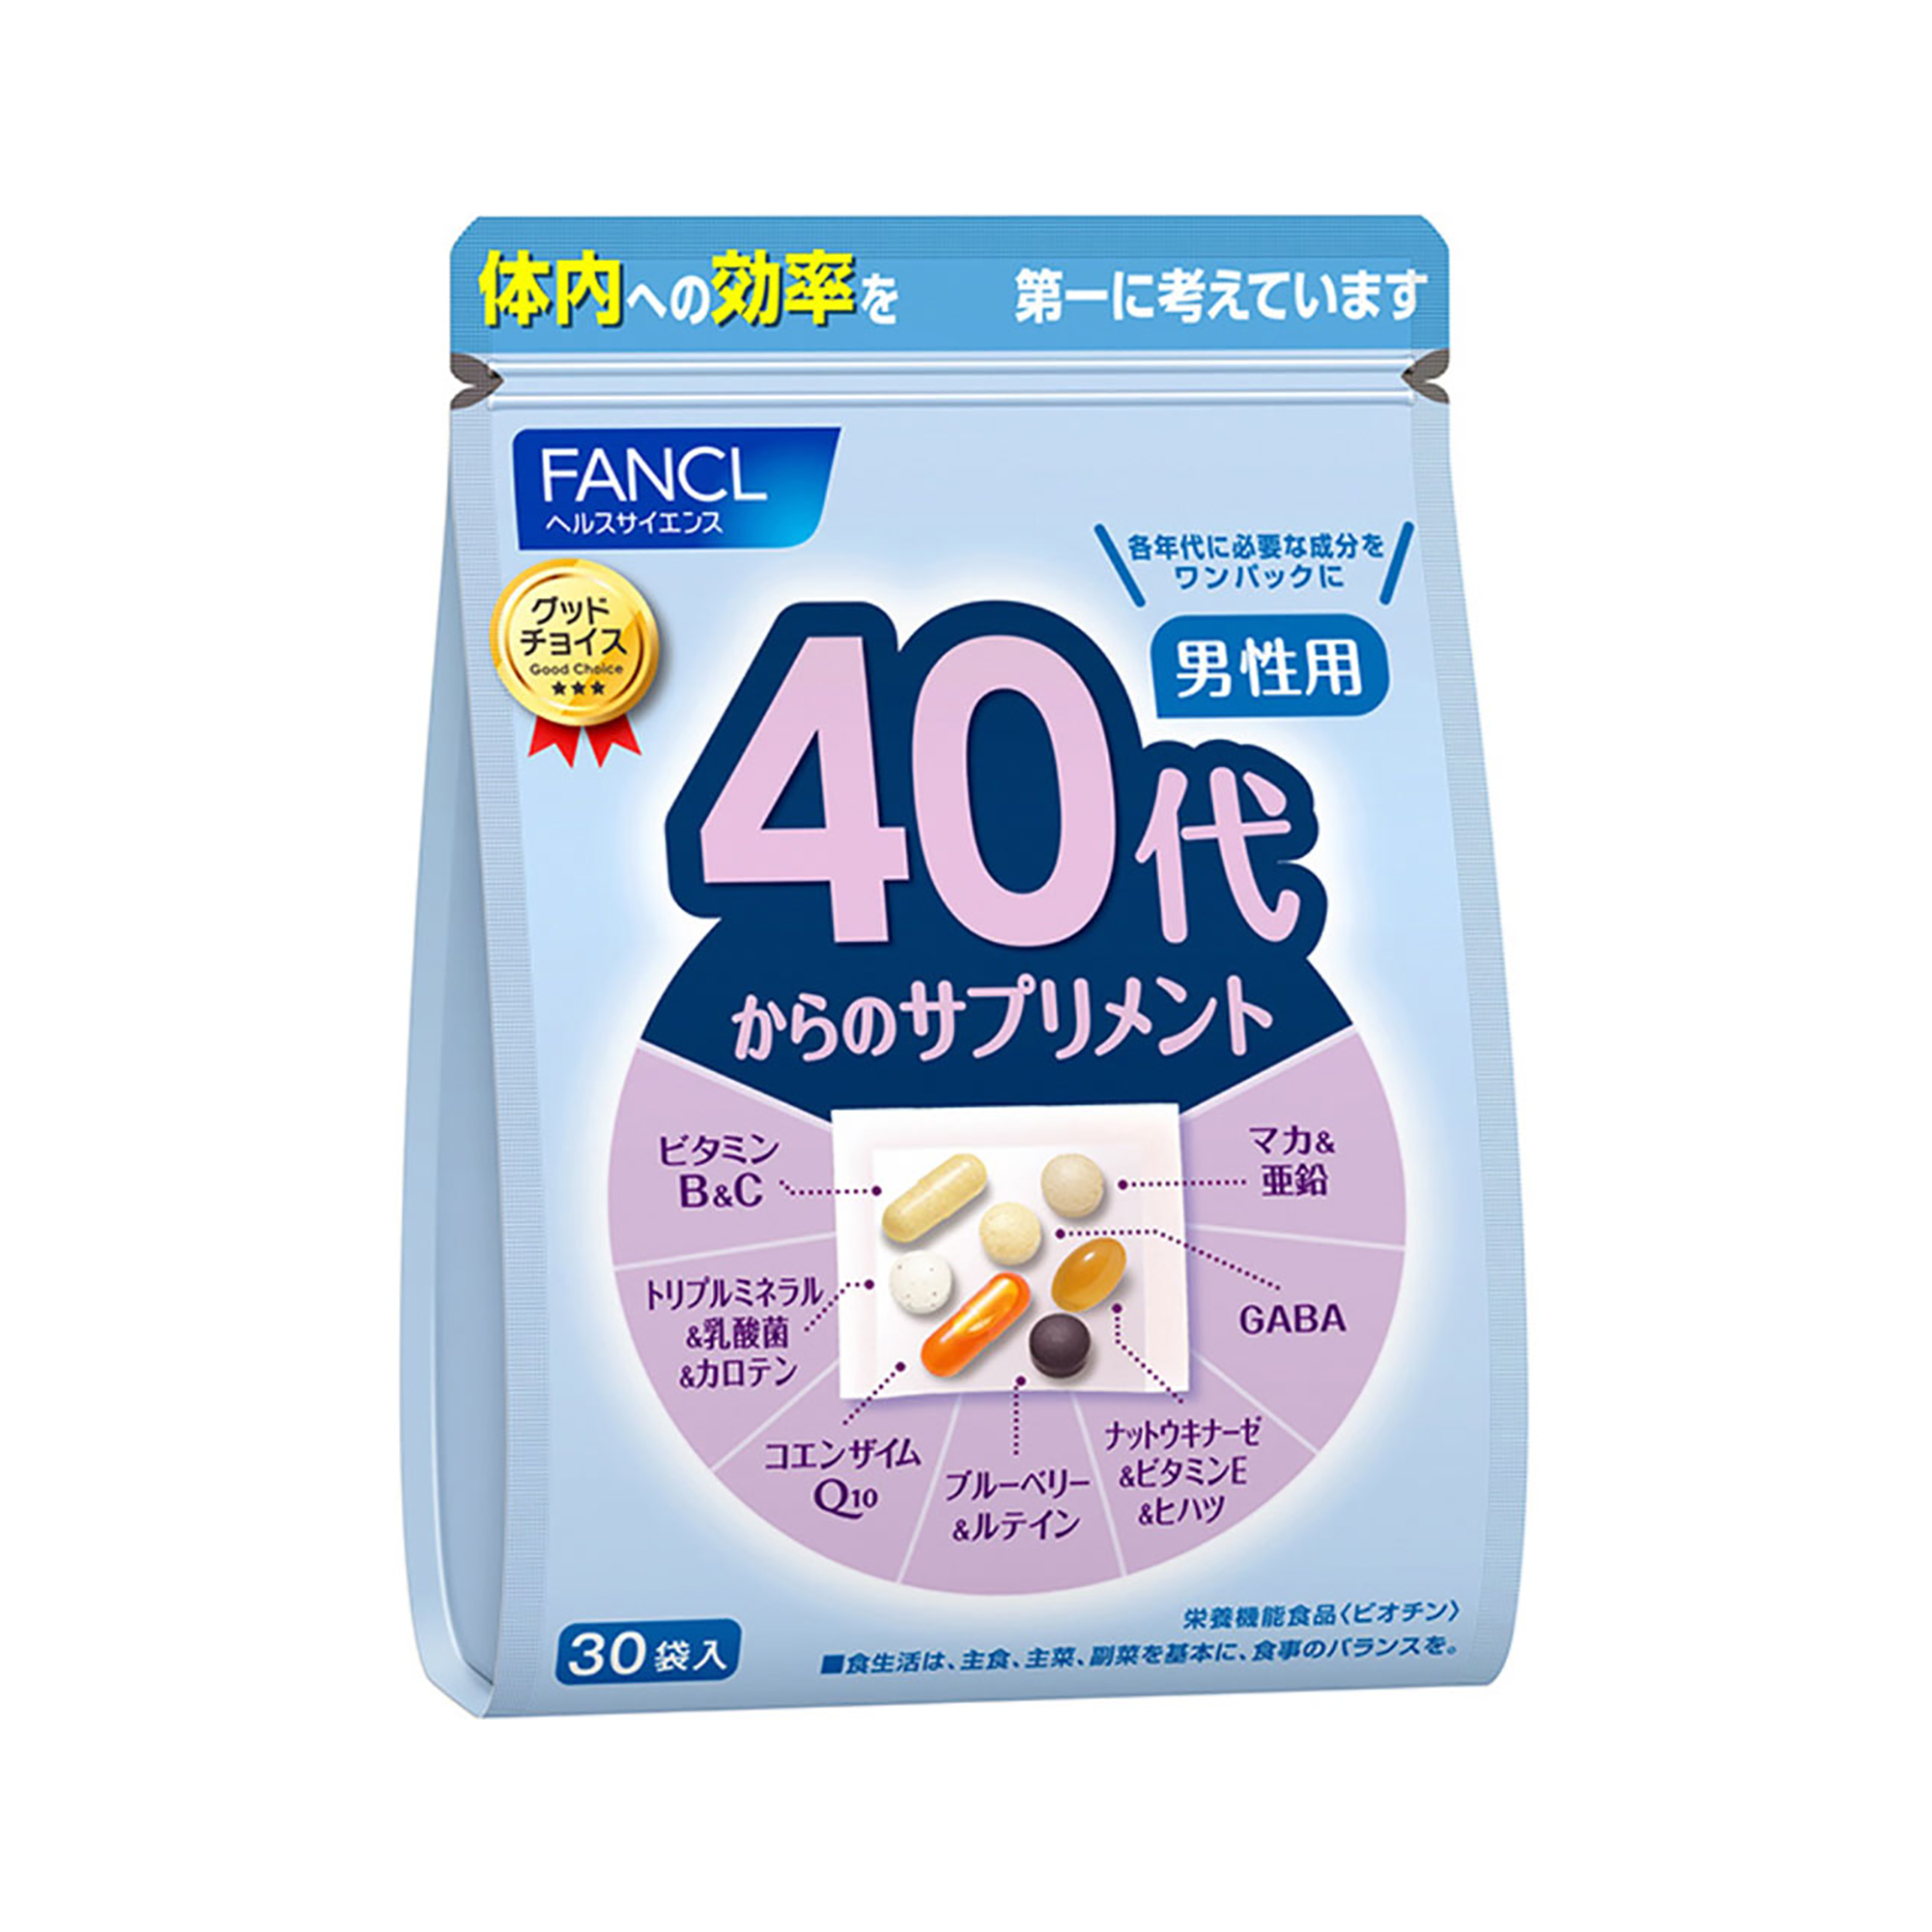 FANCL 40代男性綜合營養包 7粒×30袋